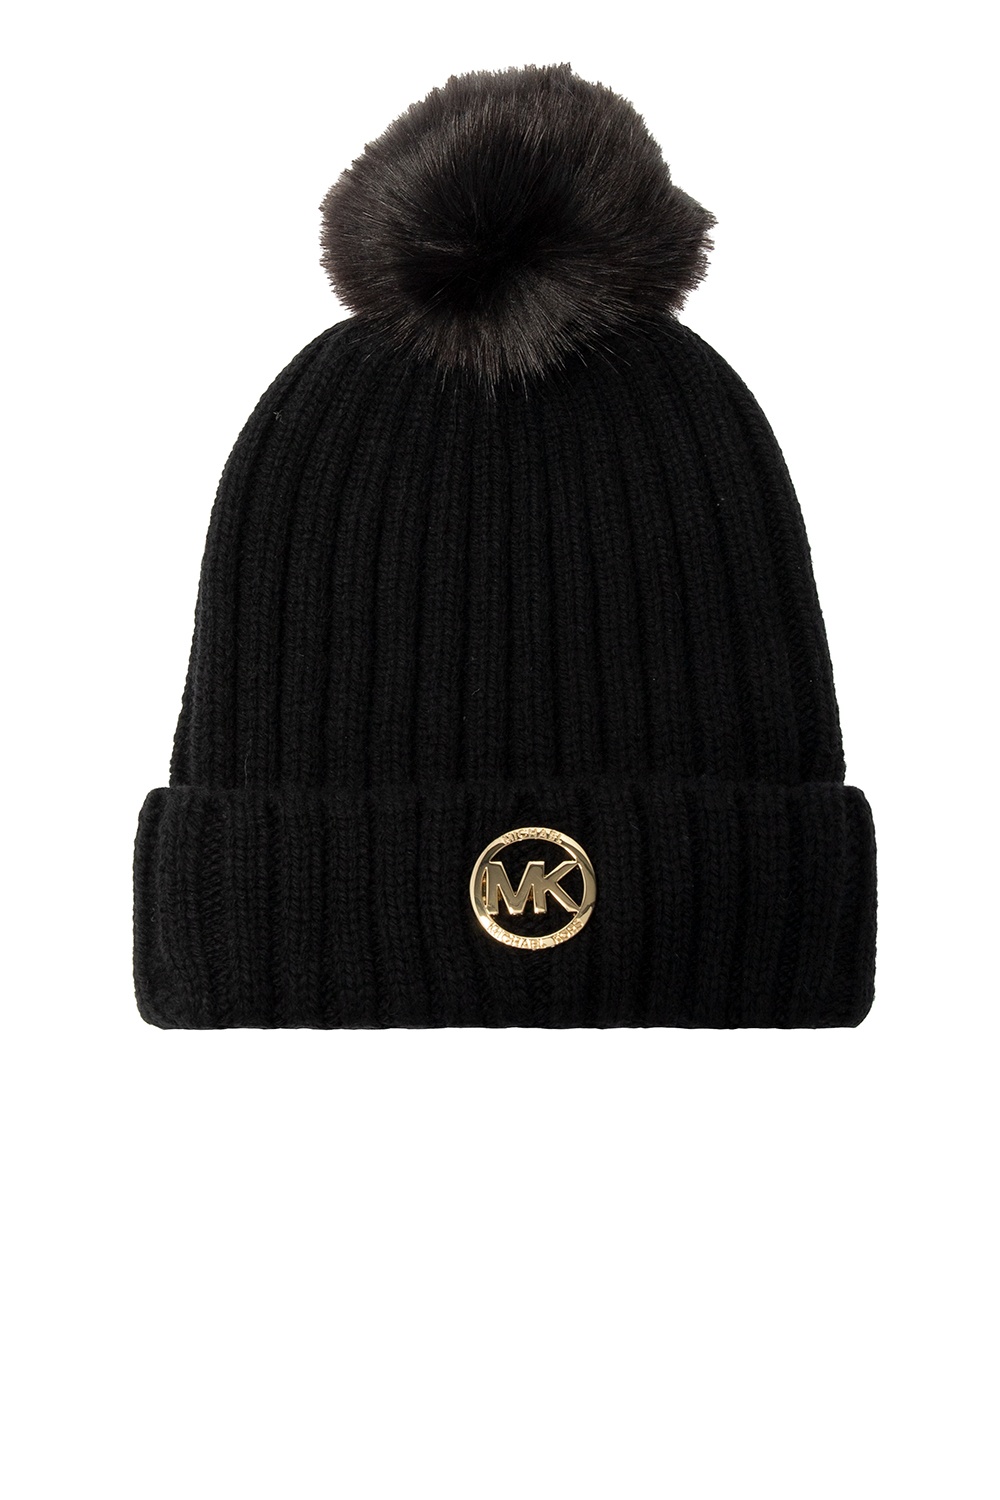 mk pom pom hat